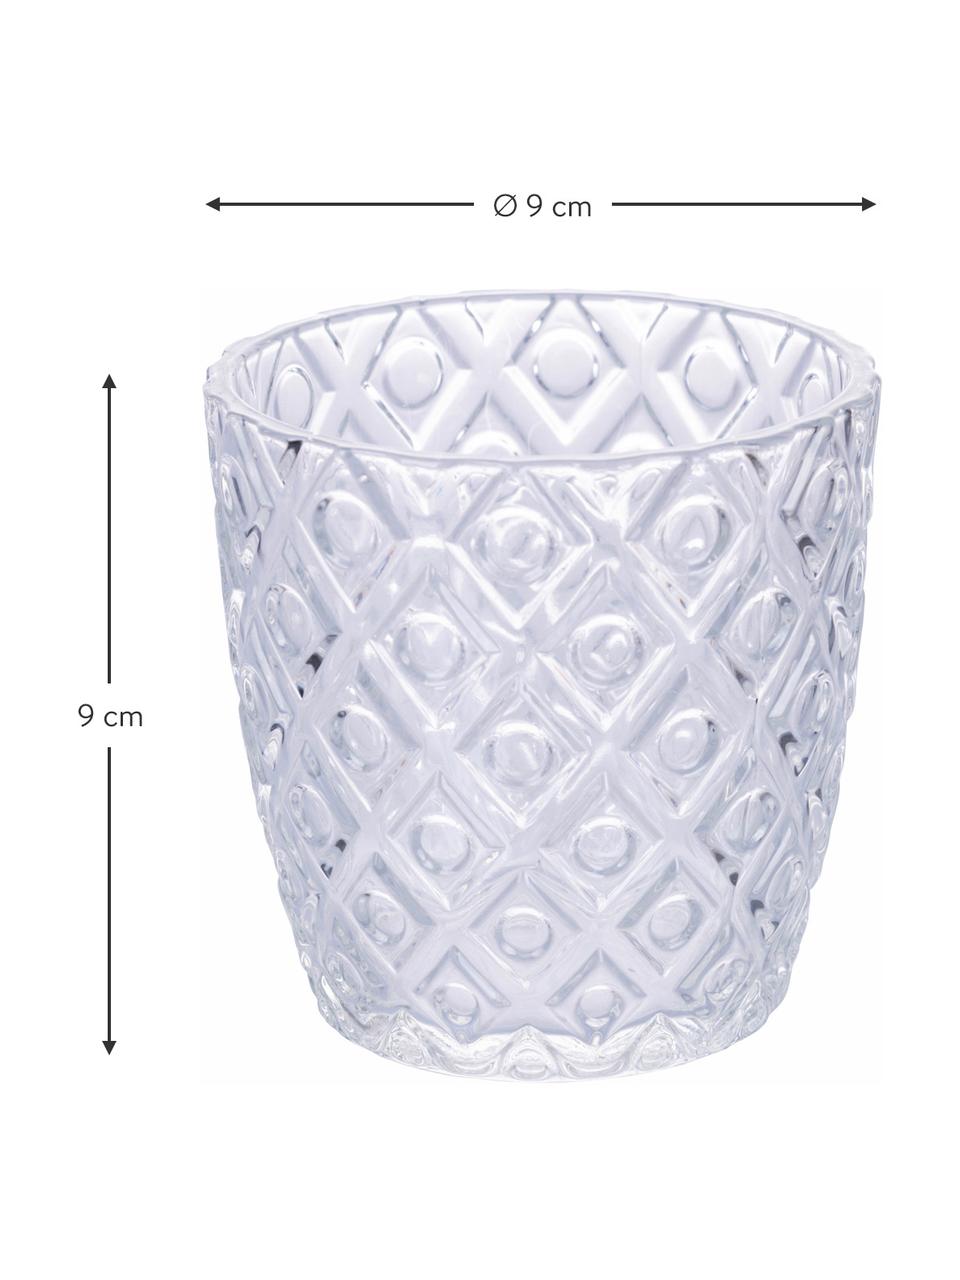 Wassergläser Geometry mit Strukturmuster, 6er-Set, Glas, Transparent, Ø 9 x H 9 cm, 380 ml